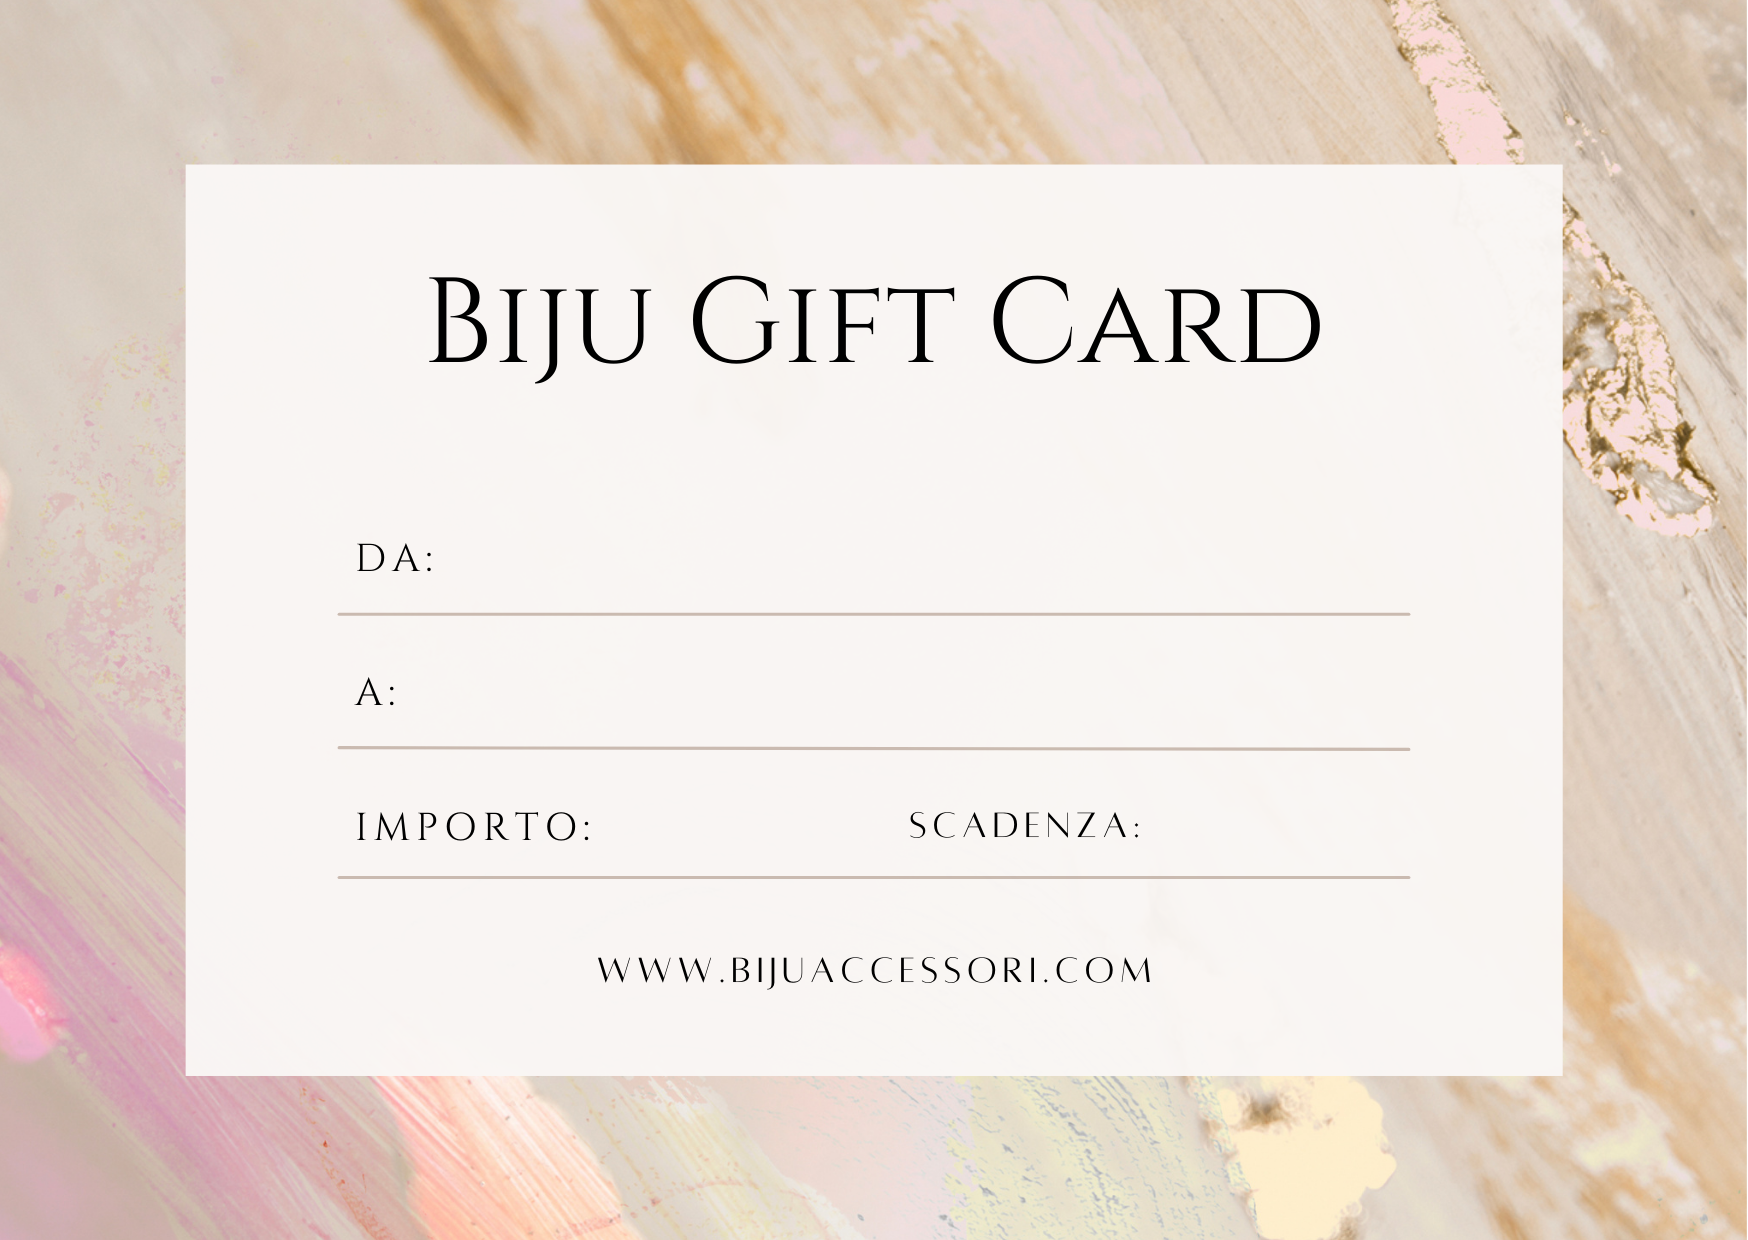 BIJU GIFT CARD10